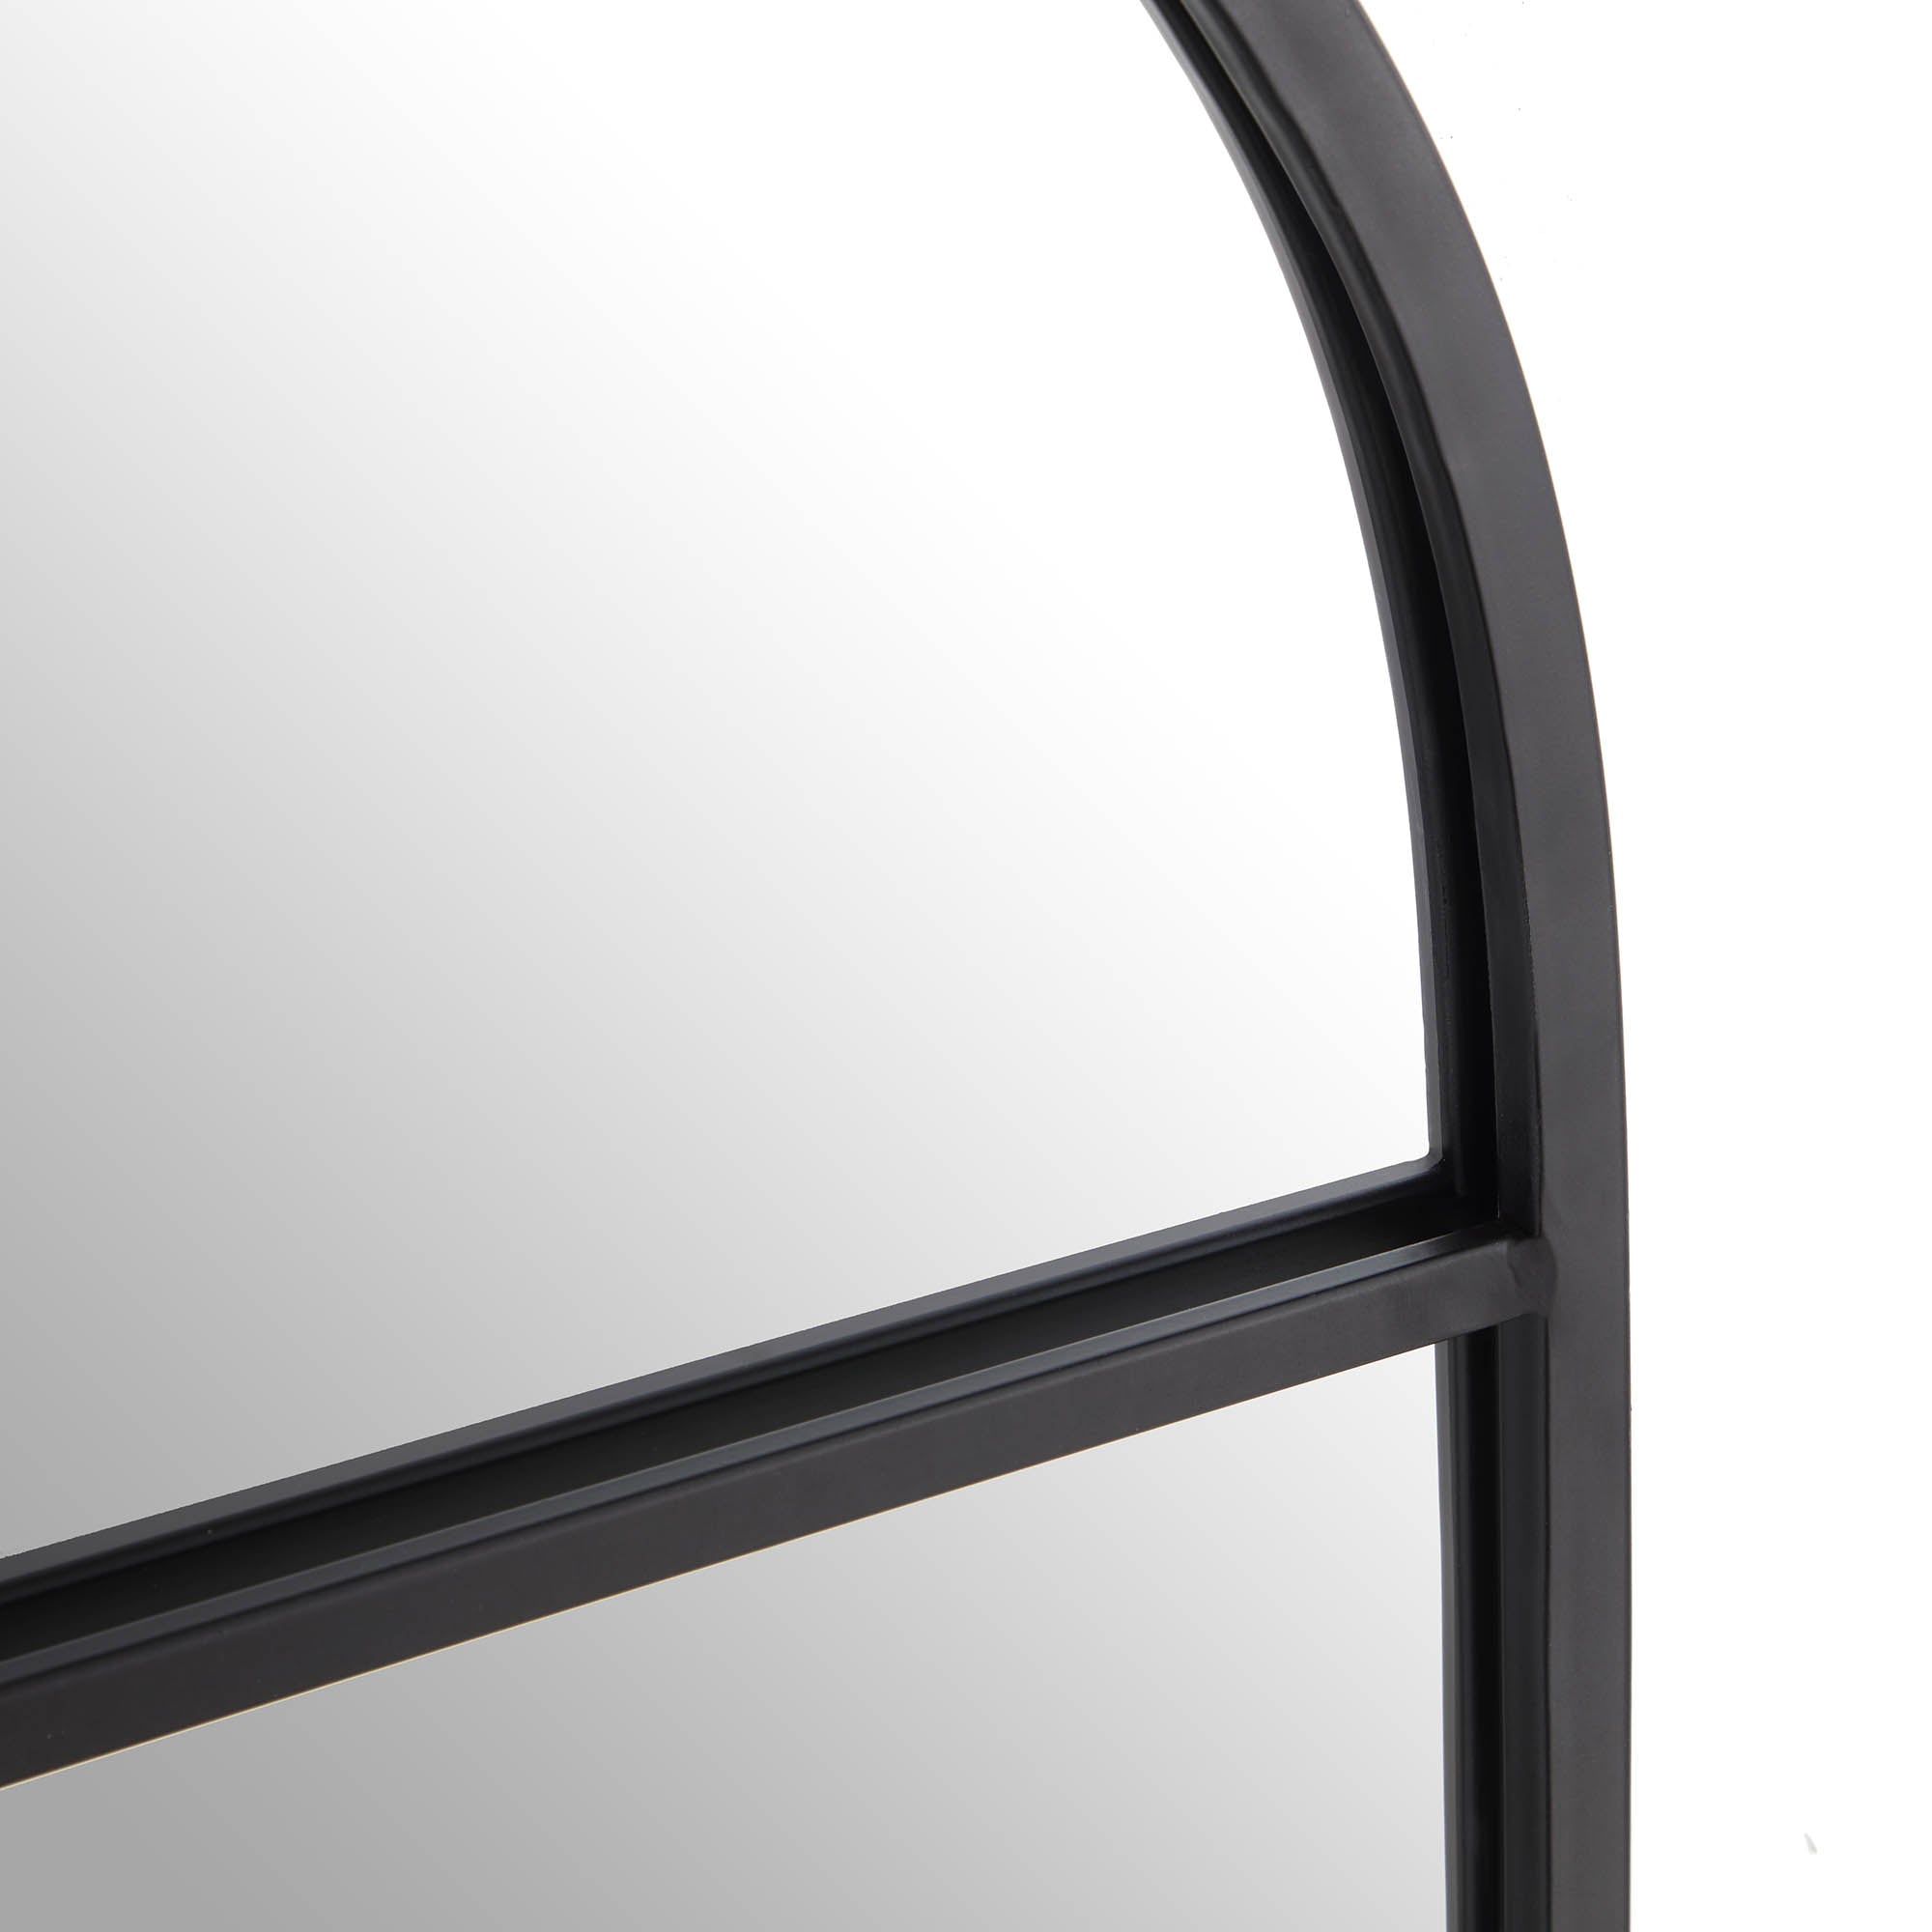 Portobello Arched Full Length Metal Frame Window Mirror 180 x 140 cm, Black